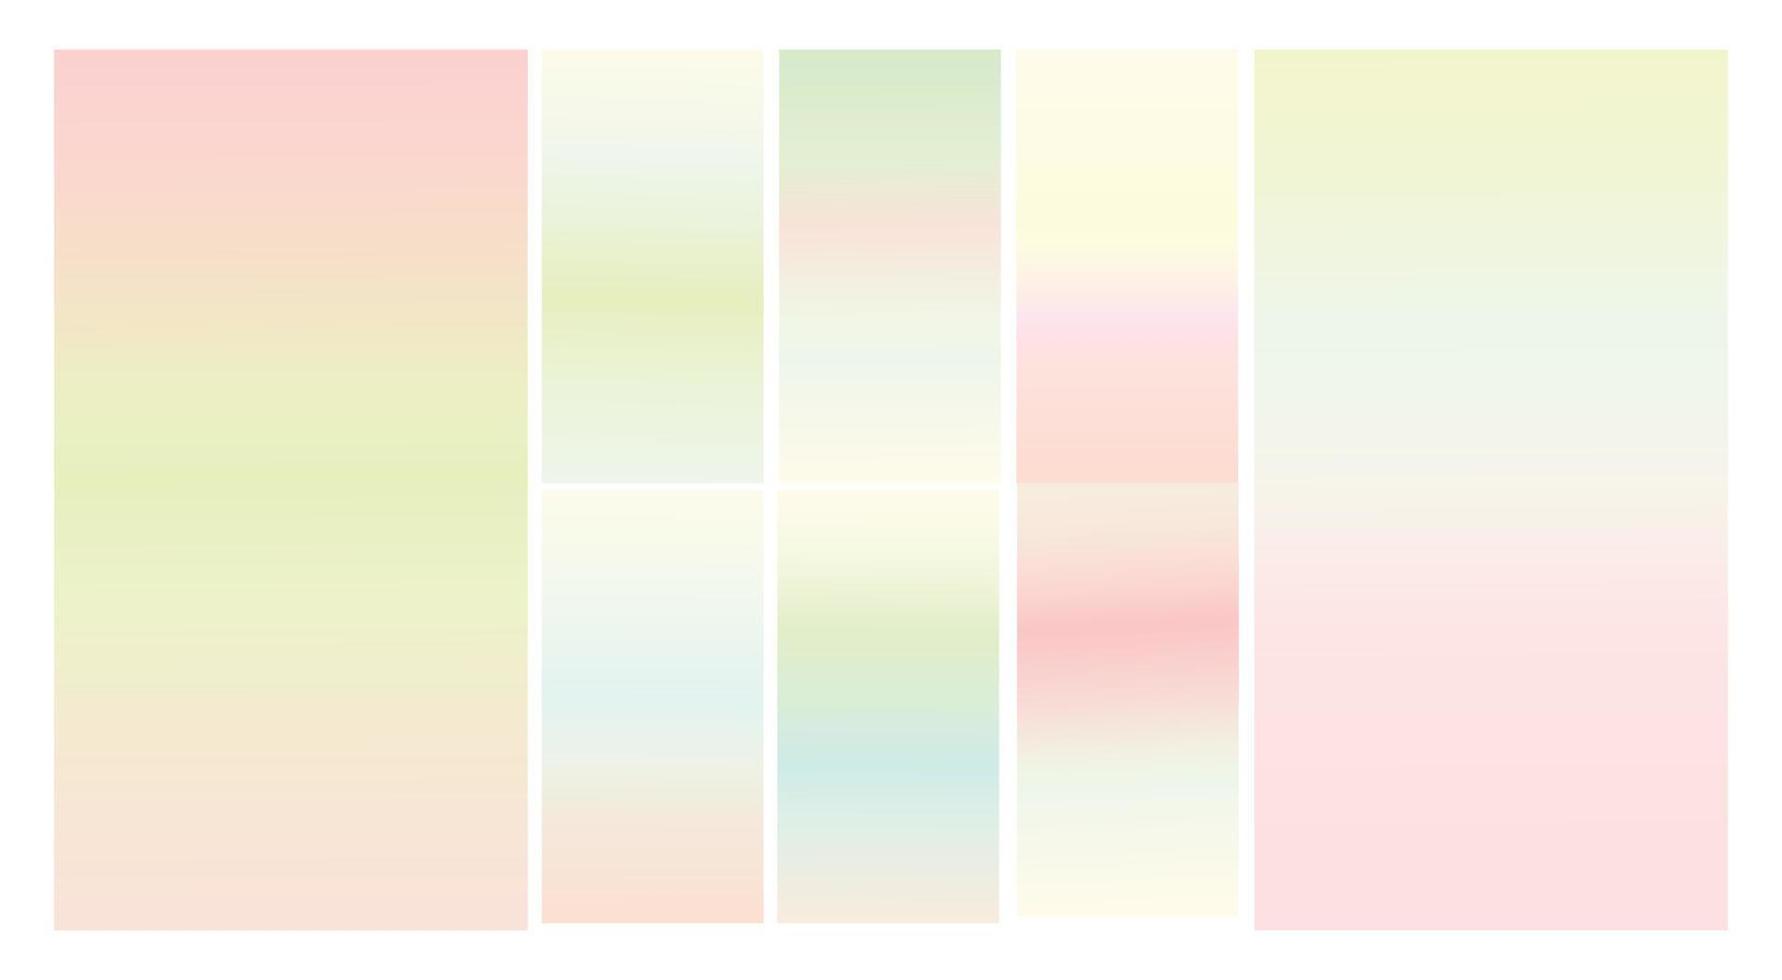 tela moderna vector multicolor fundo gradiente pastel. gradiente de cores suaves e vibrantes para aplicativos móveis, design de plano de fundo. gradiente de cor suave brilhante para aplicativos móveis.